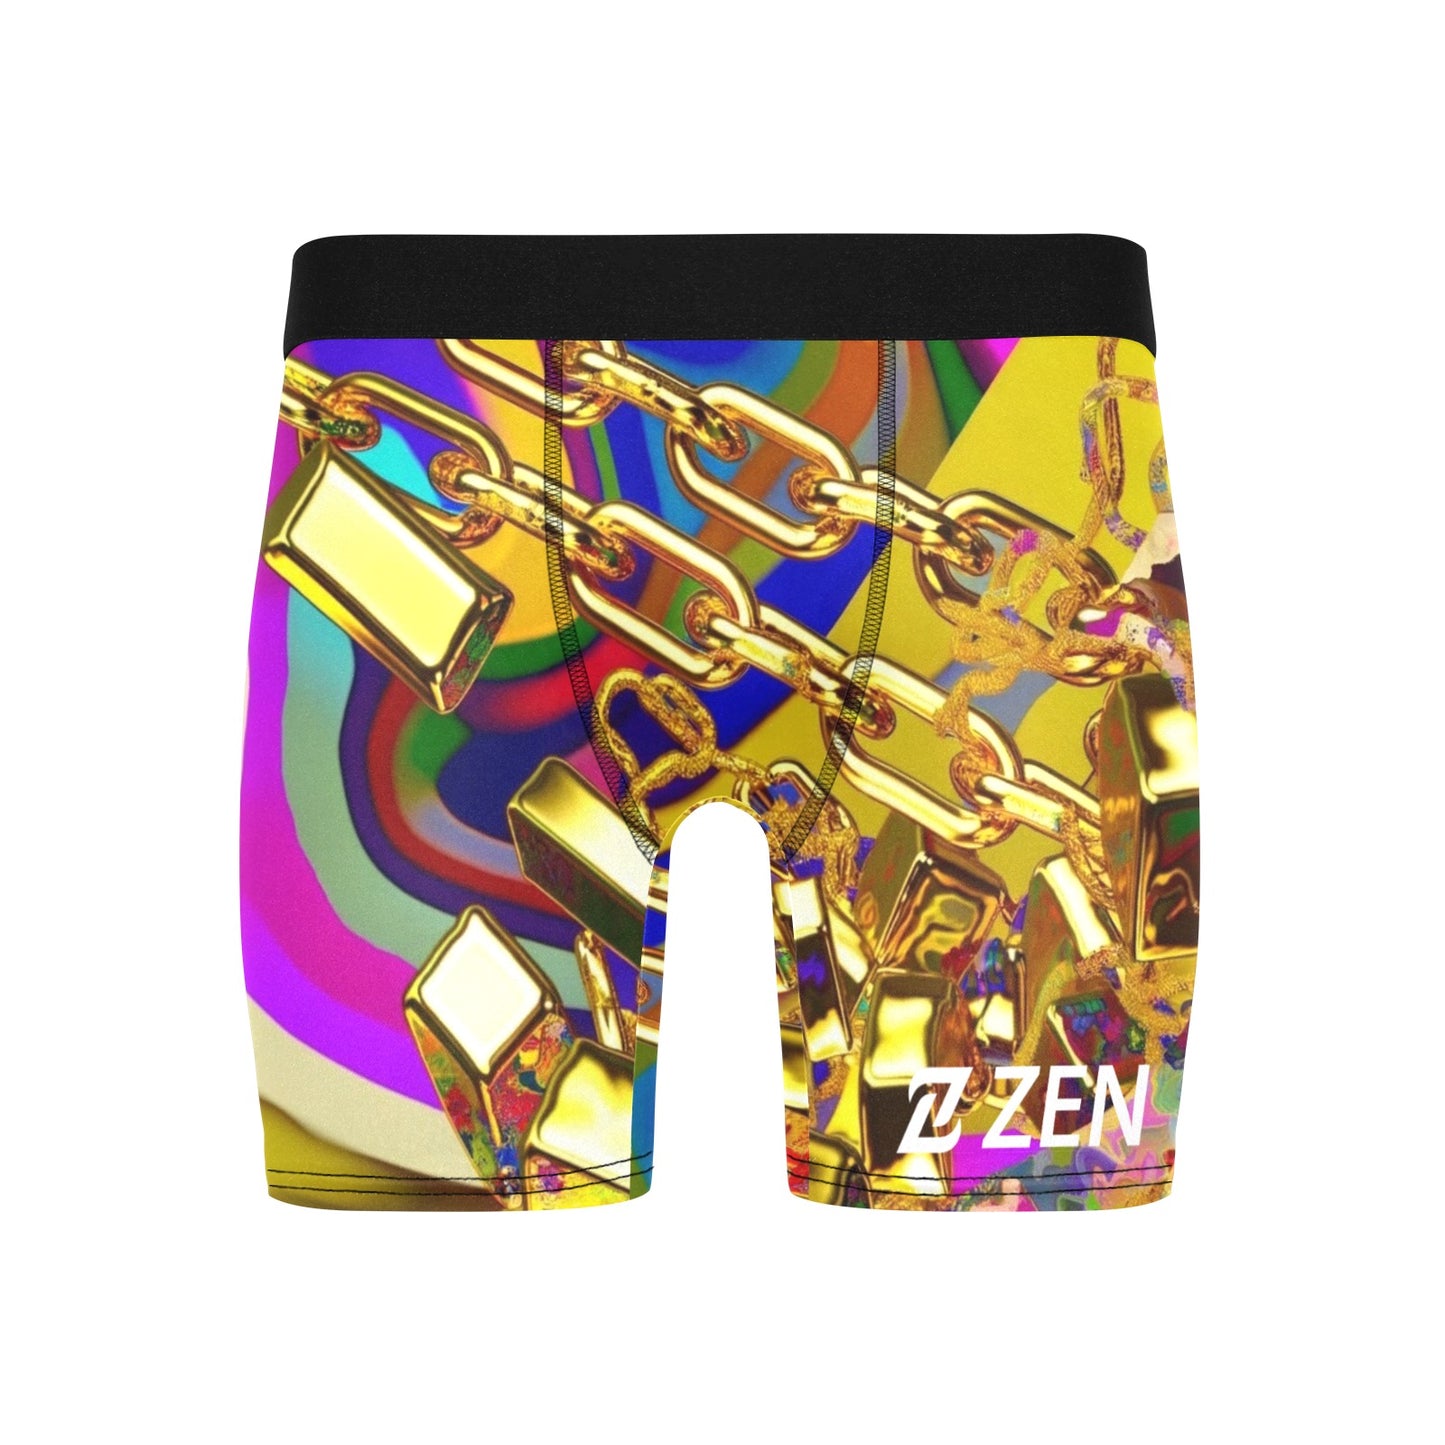 Zen Boxers Long - Gold Crazy